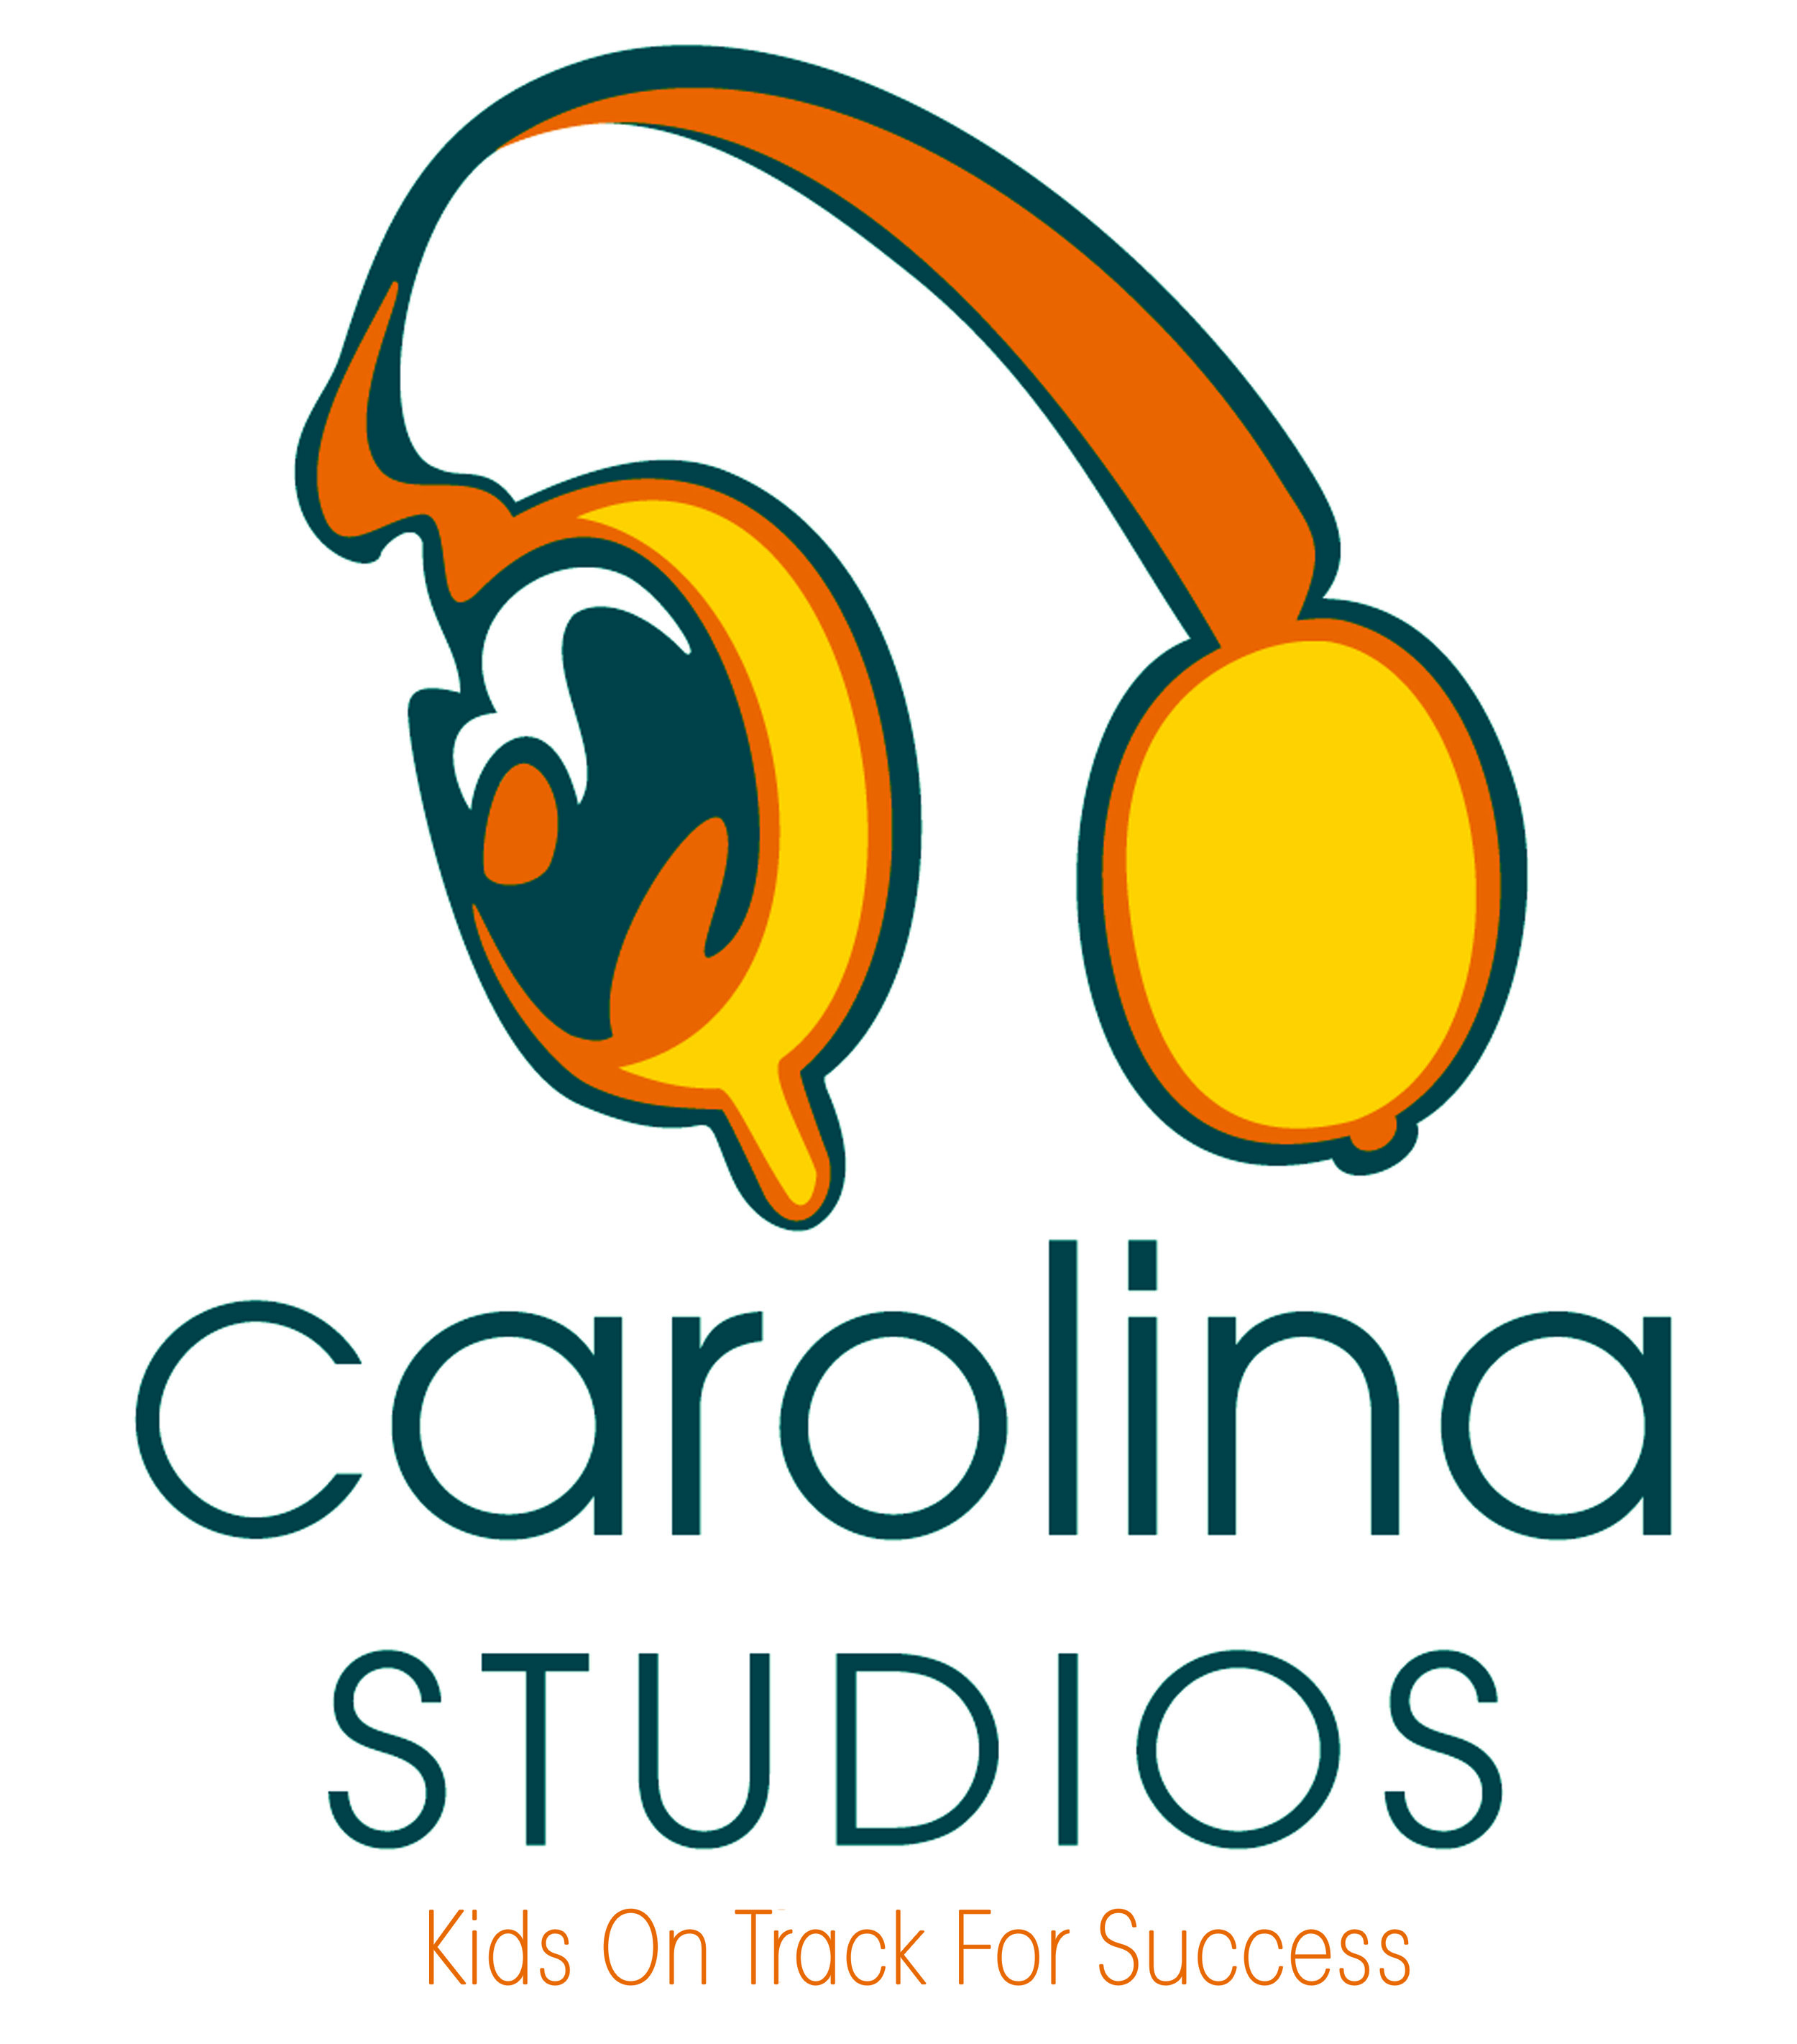 carolina studios logo 1.jpg